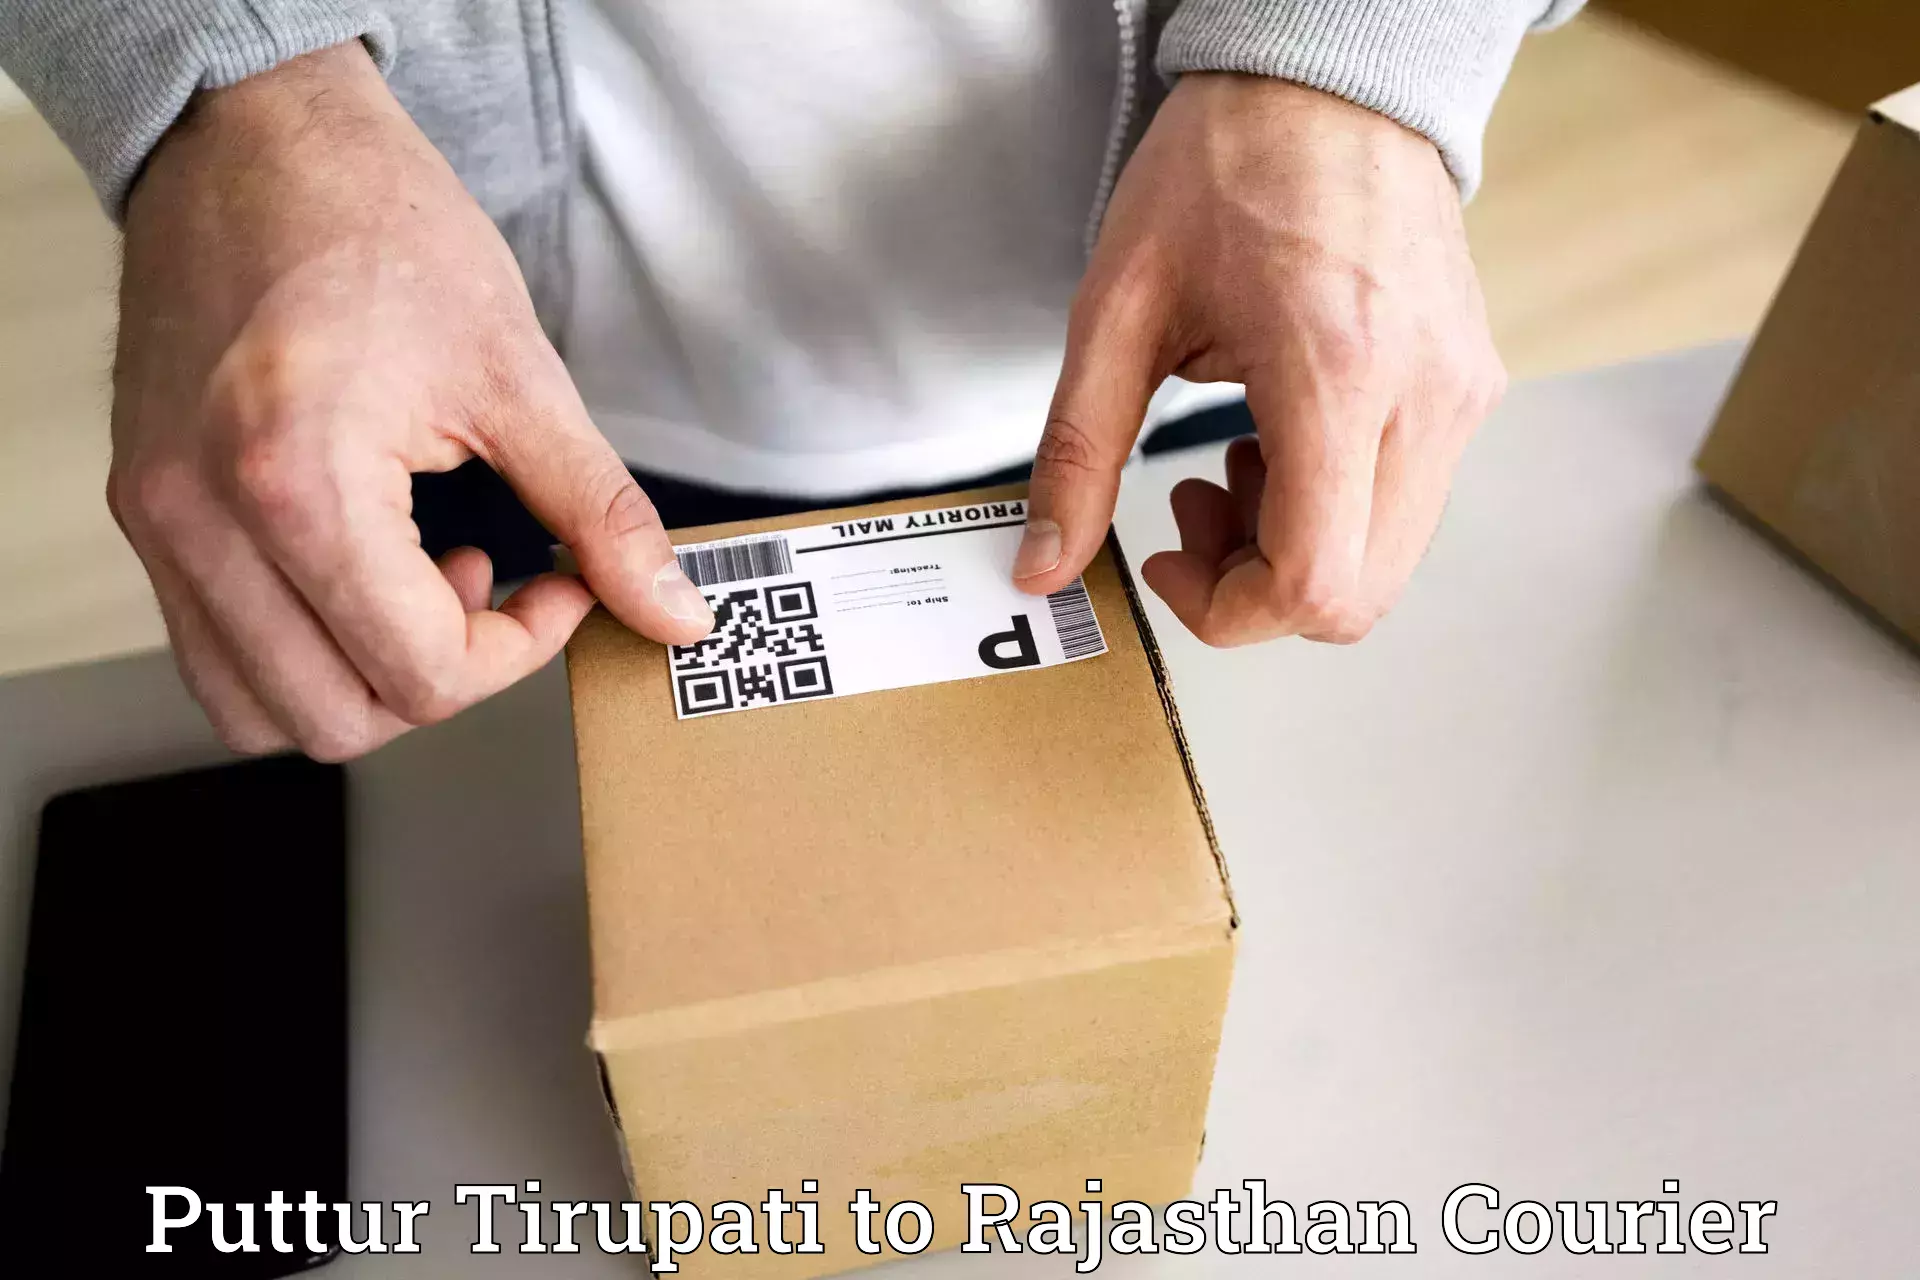 Business delivery service Puttur Tirupati to Kushalgarh